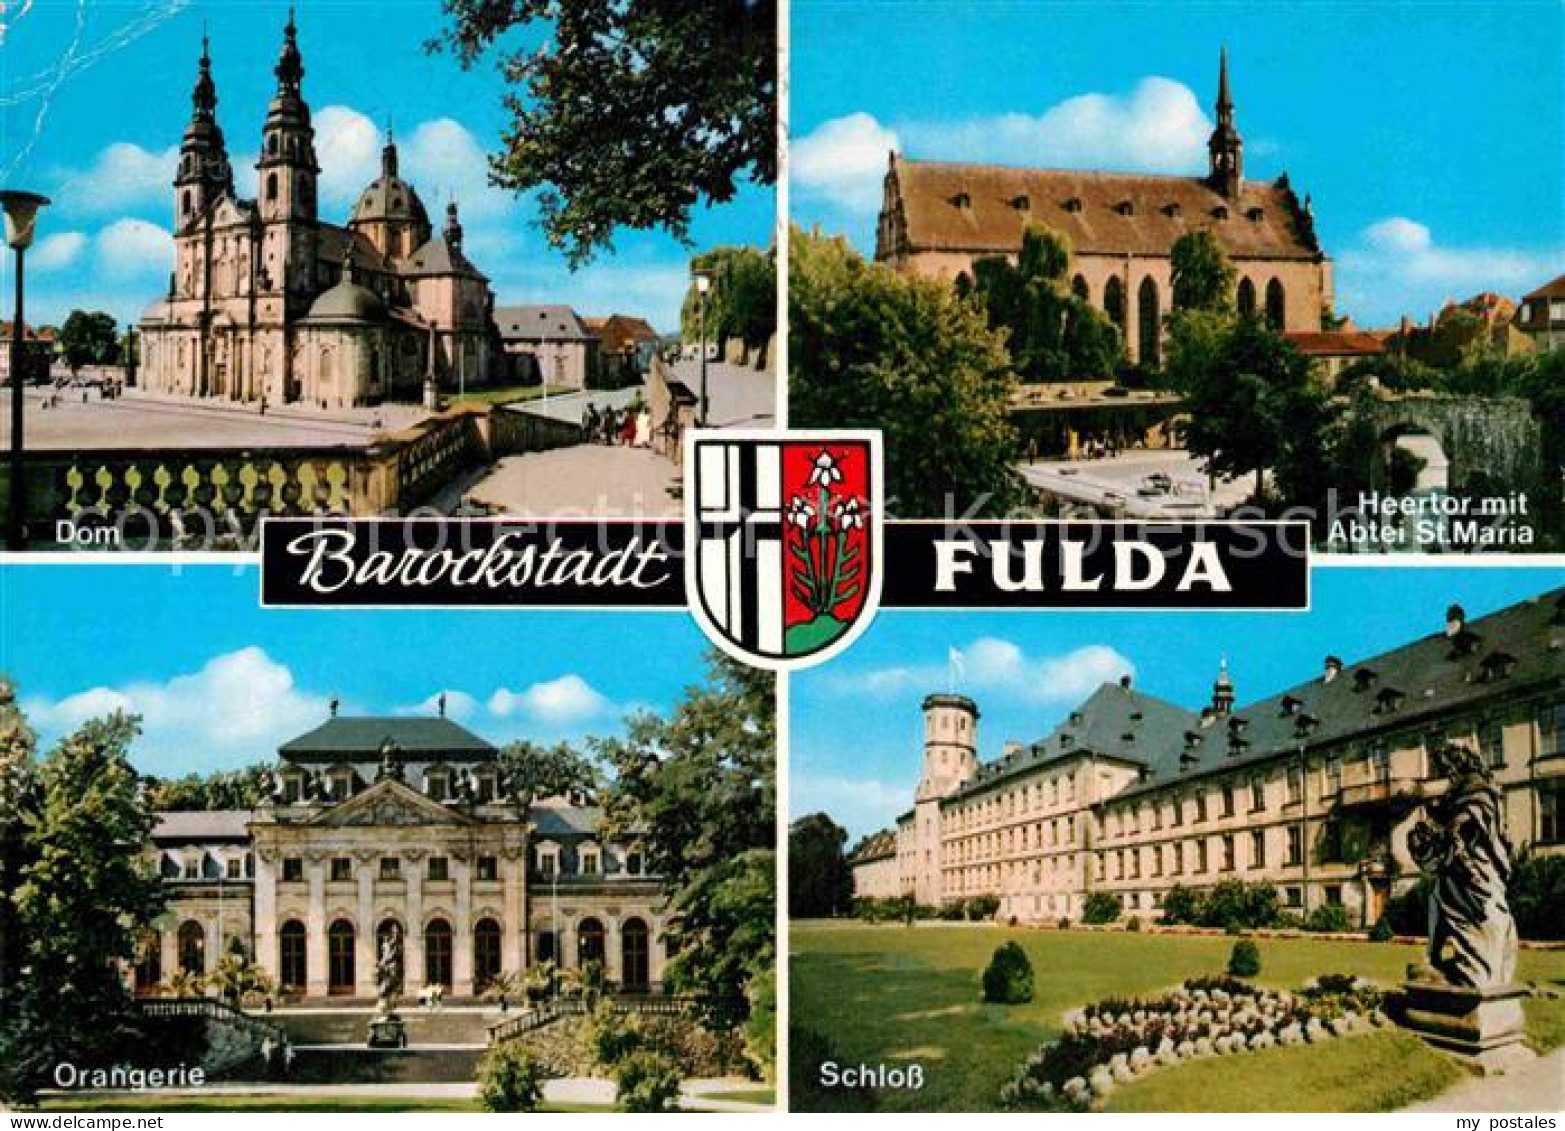 72875616 Fulda Dom Heertor Mit Abtei St Maria Schloss Orangerie Barockstadt Fuld - Fulda